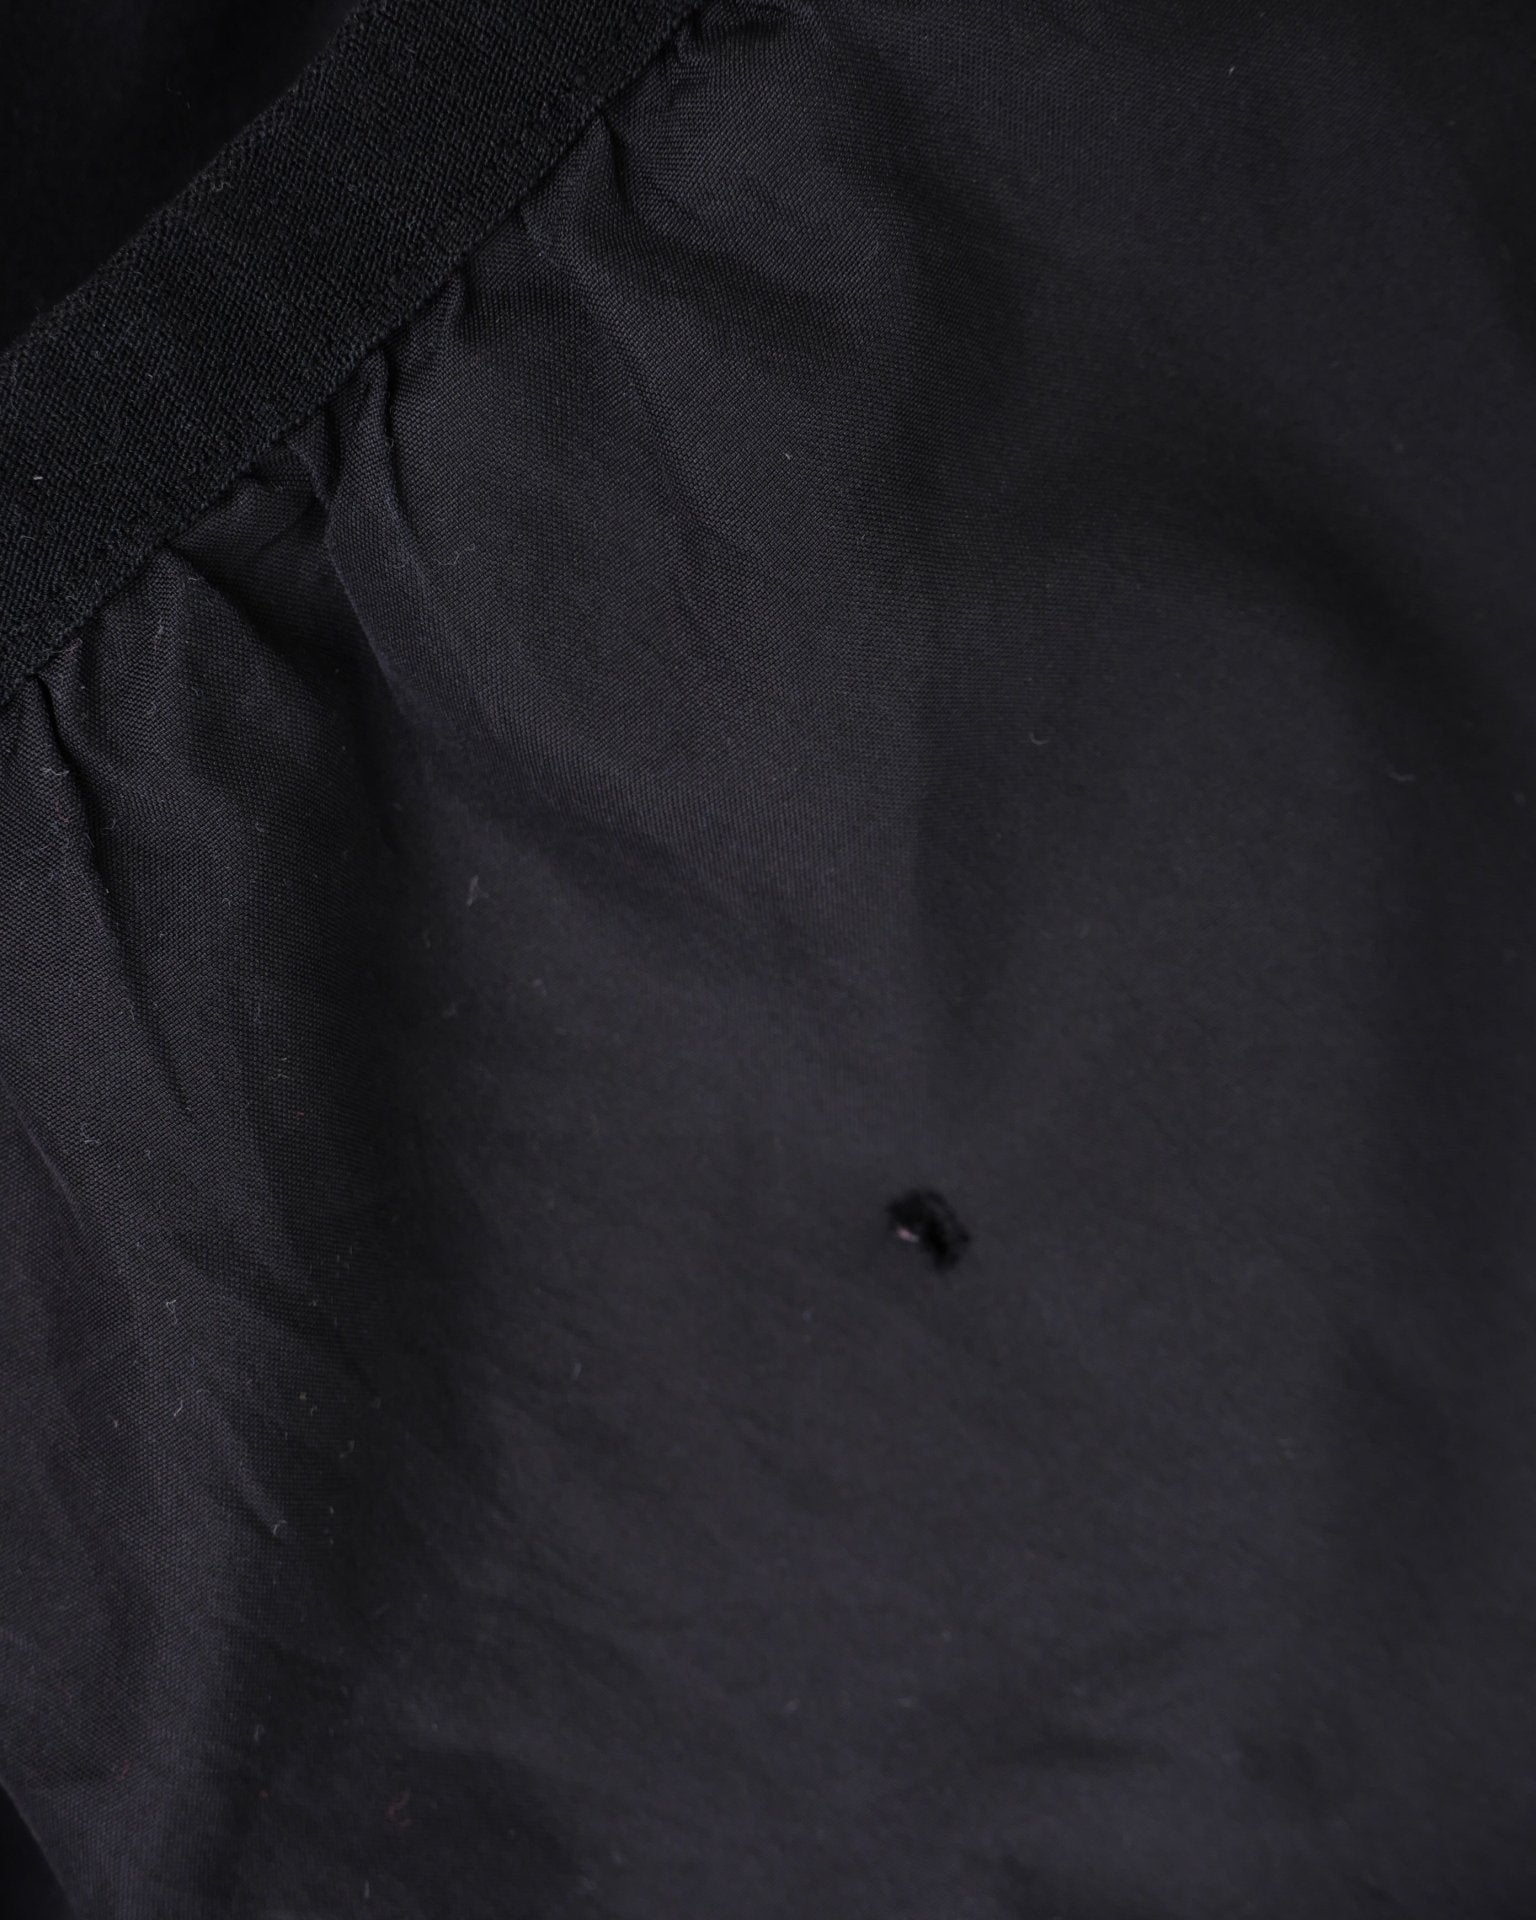 Adidas embroidered Logo black Track Jacket - Peeces